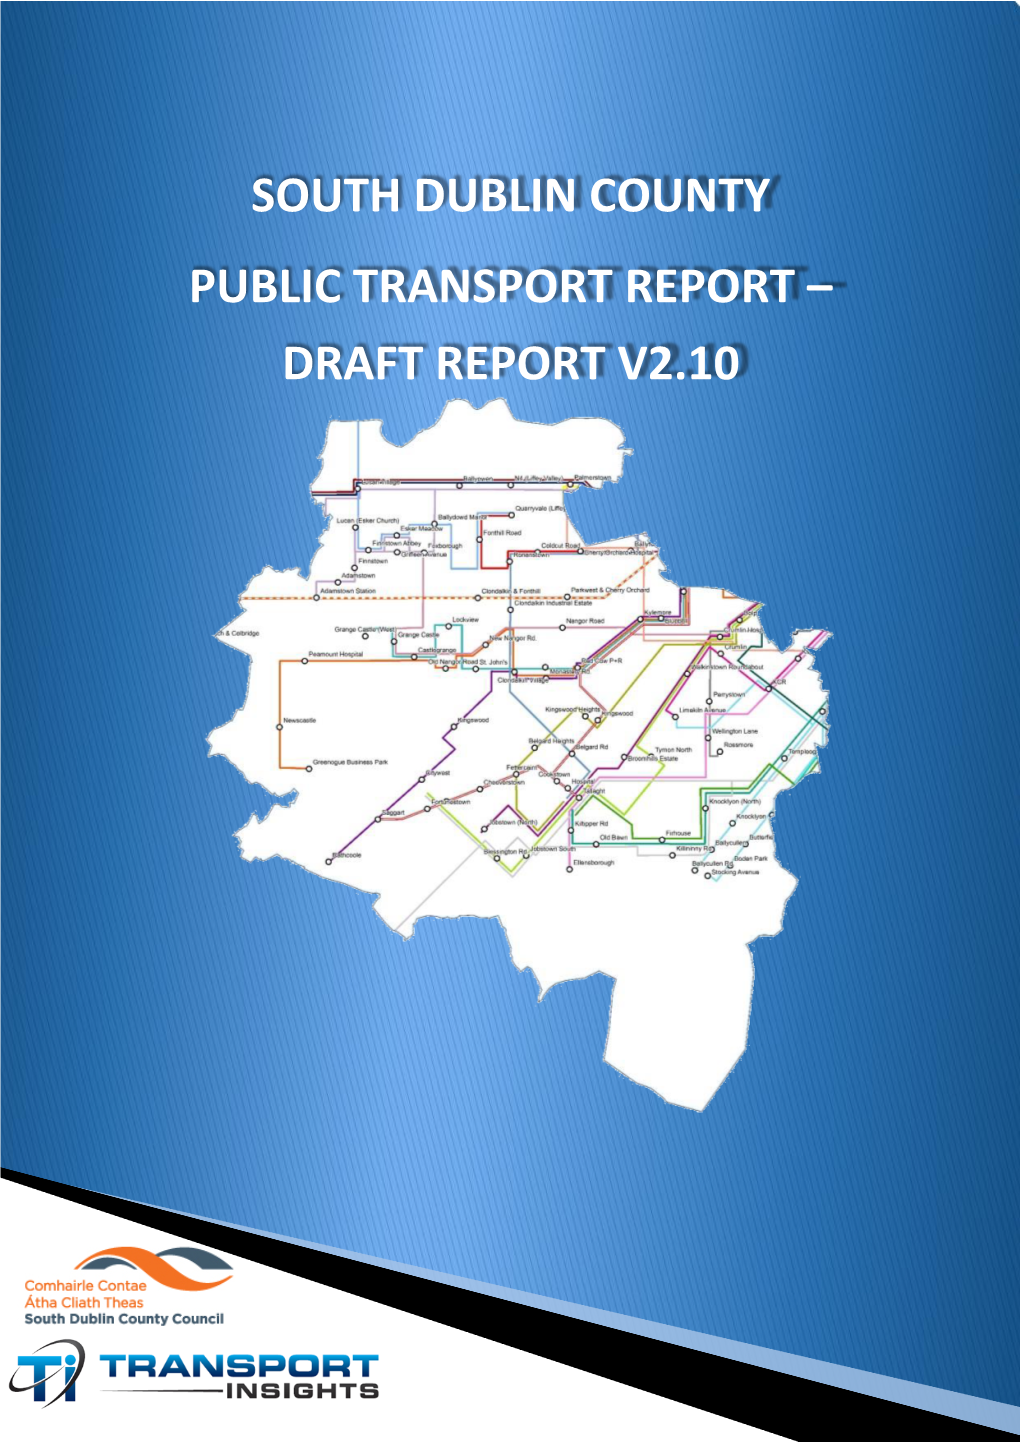 South Dublin County Public Transport Report – Draft Report V2.10